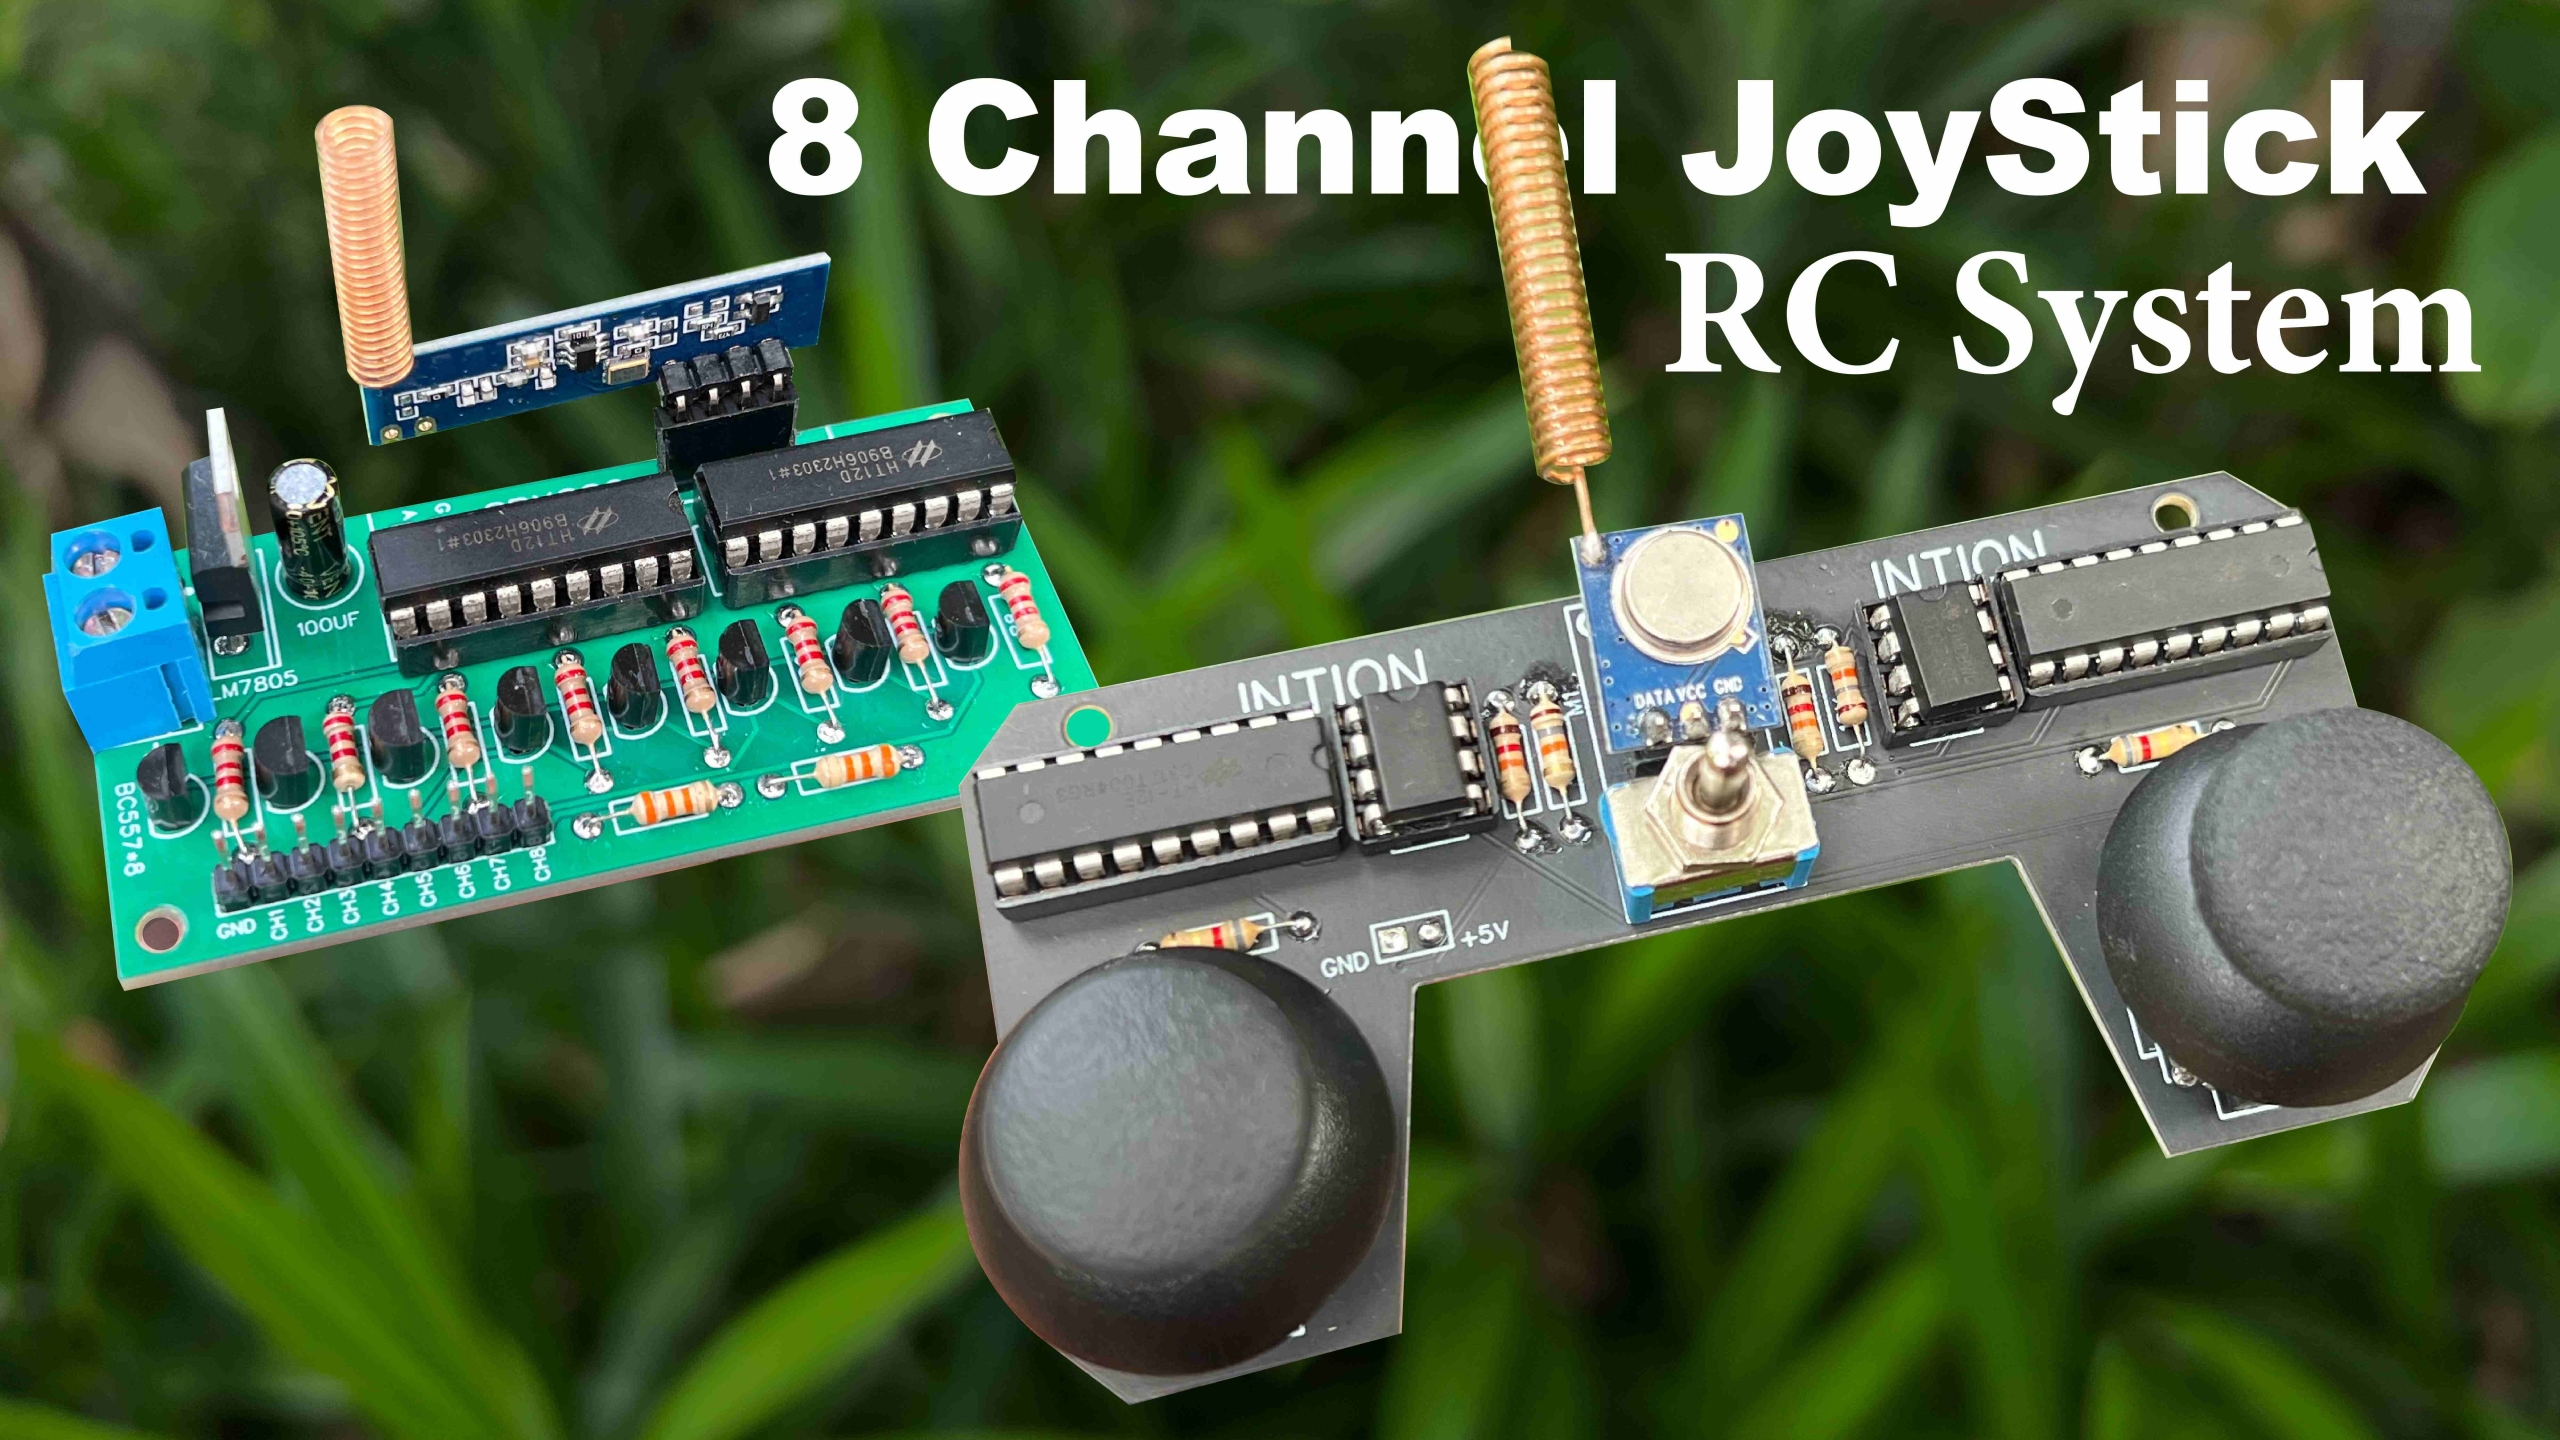 8 Channel Joystick Remote control system | Make your own Remote control System